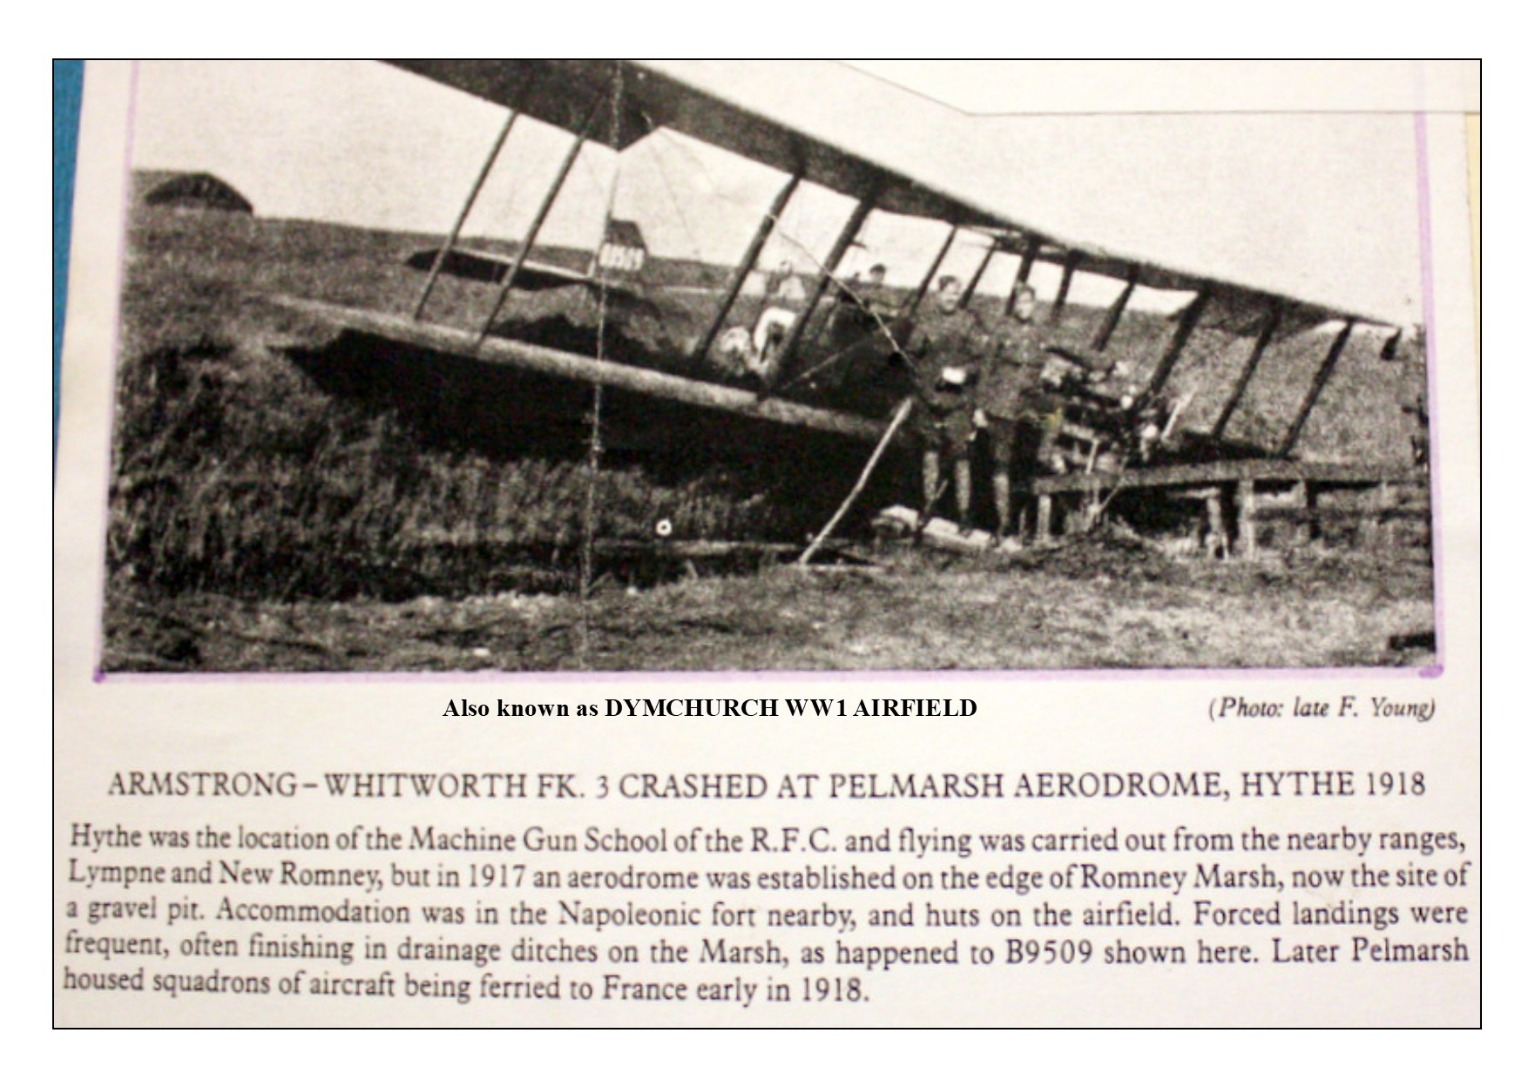 004Plane crash at Dymchurch airfield.jpg